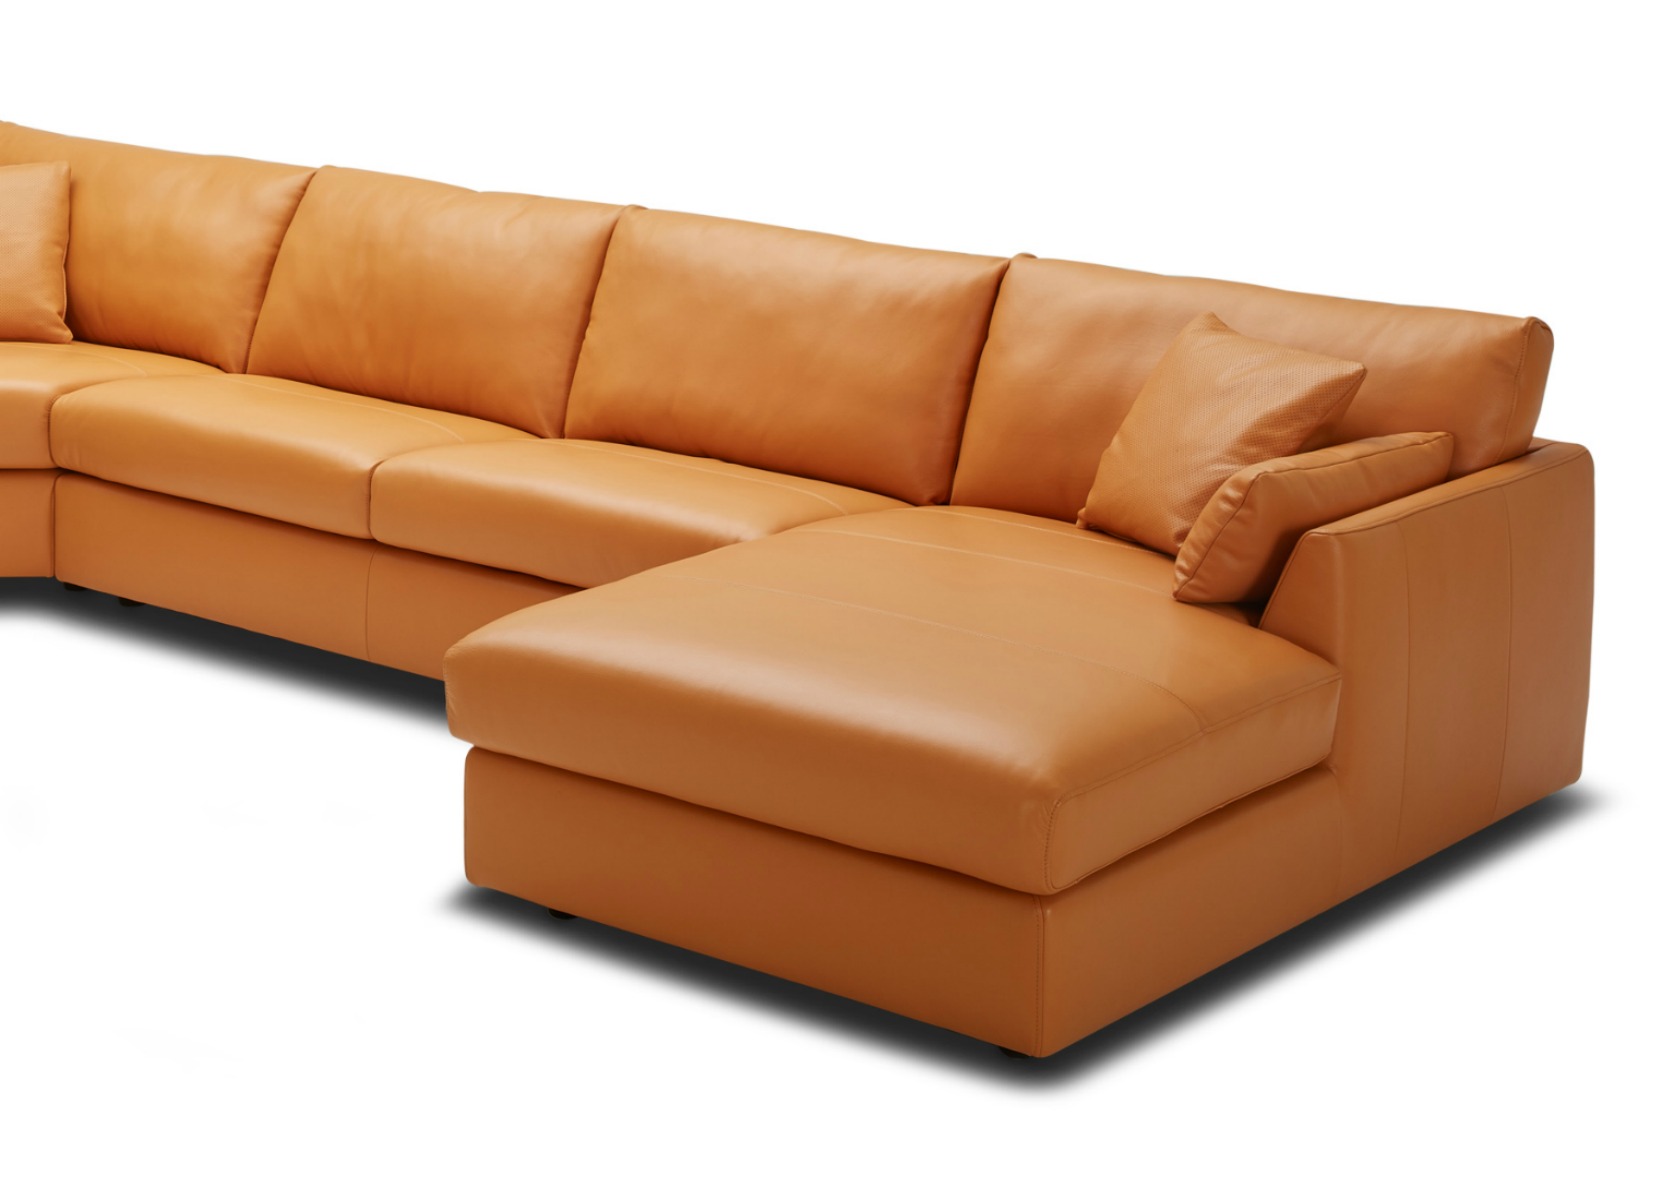 tan leather chaise lounge sofa